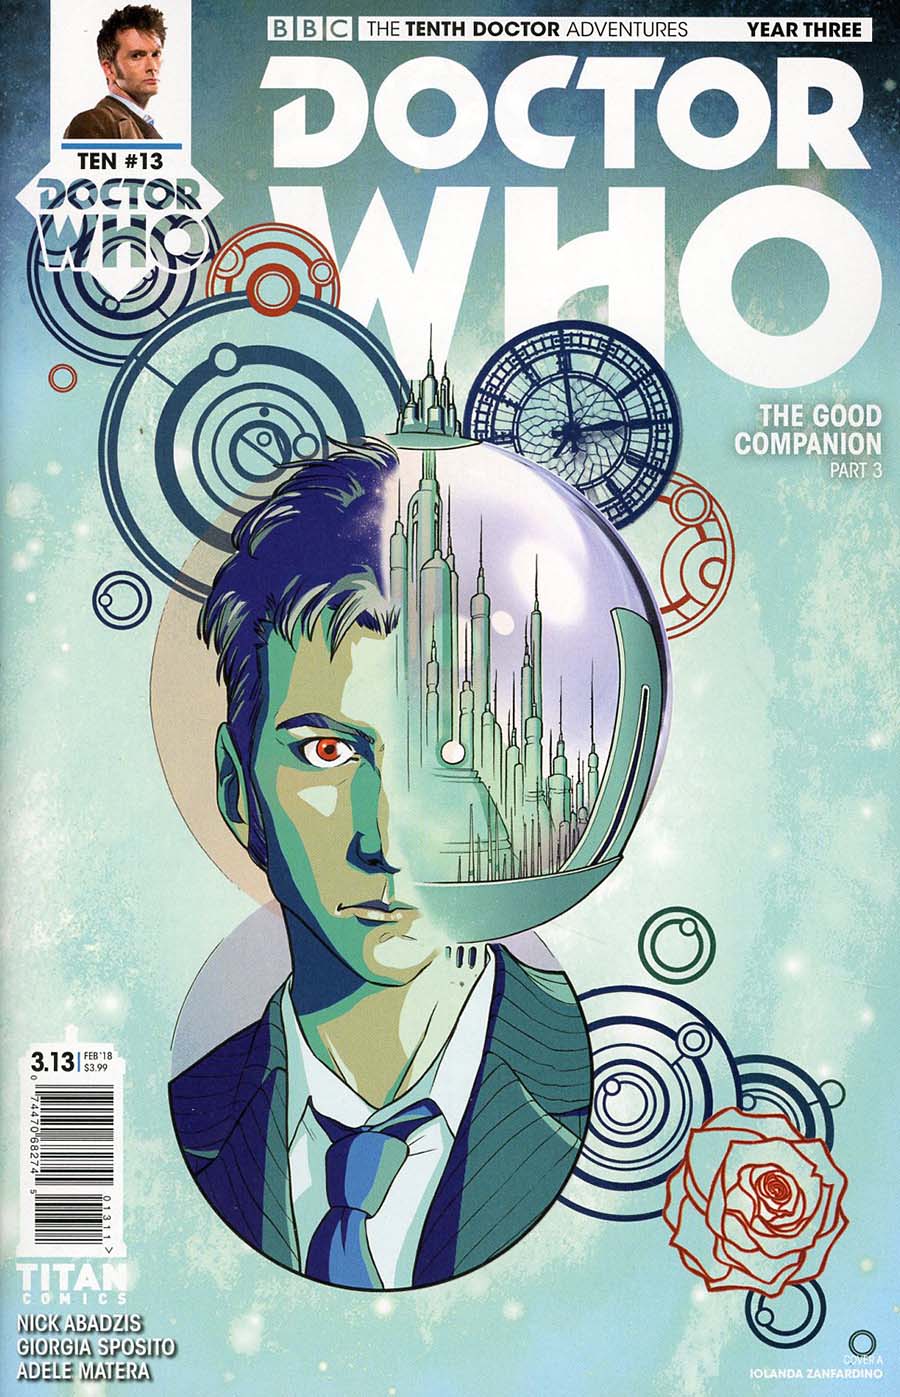 Doctor Who 10th Doctor Year Three #13 Cover A Regular Iolanda Zanfardino Cover